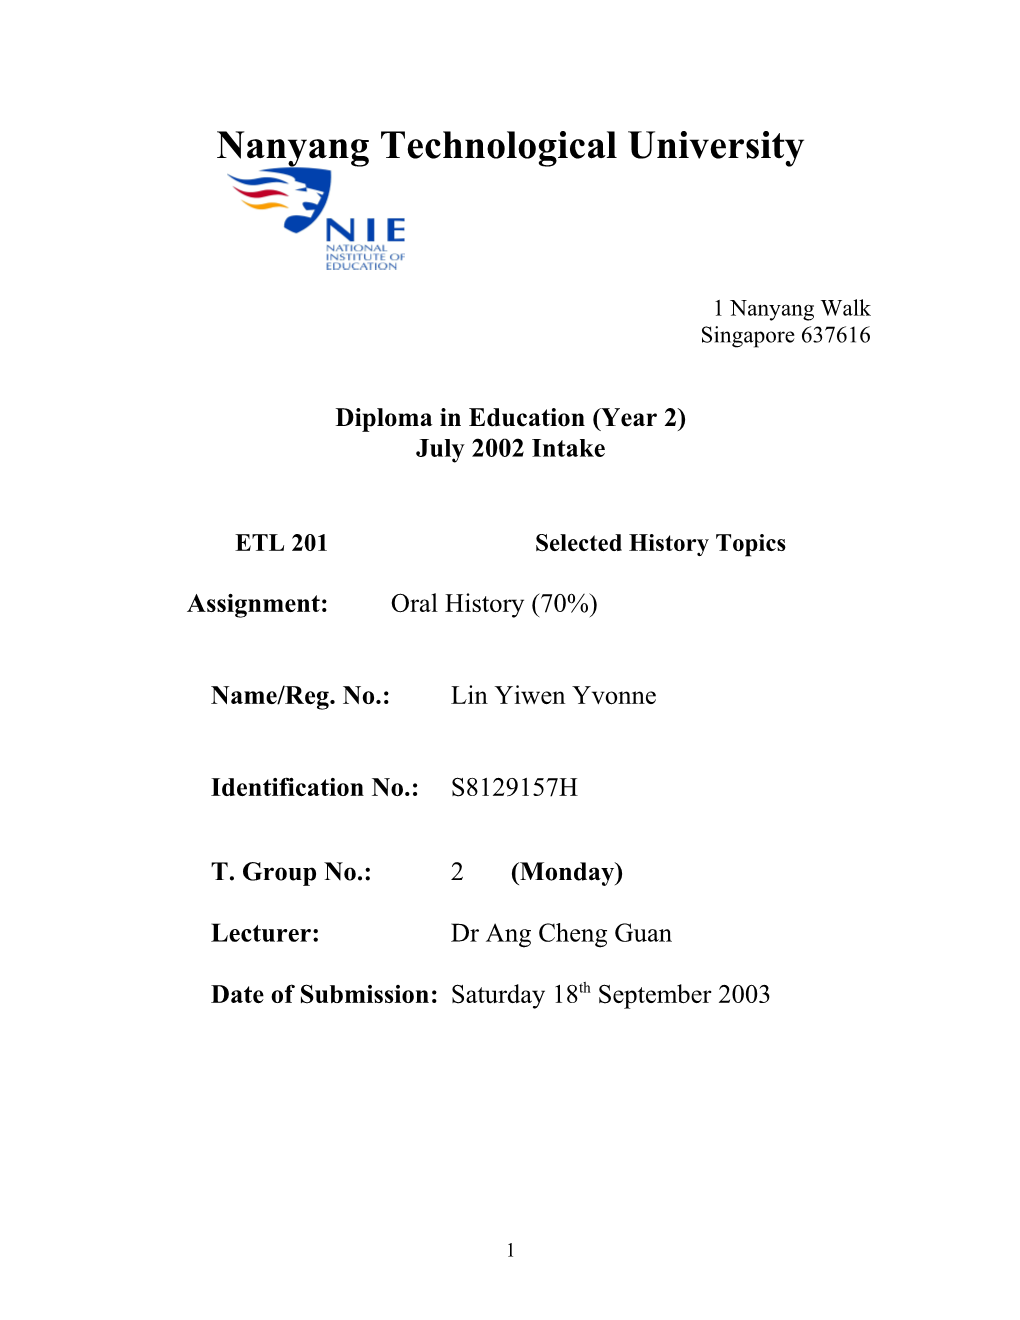 ETL 201 Selected History Topics